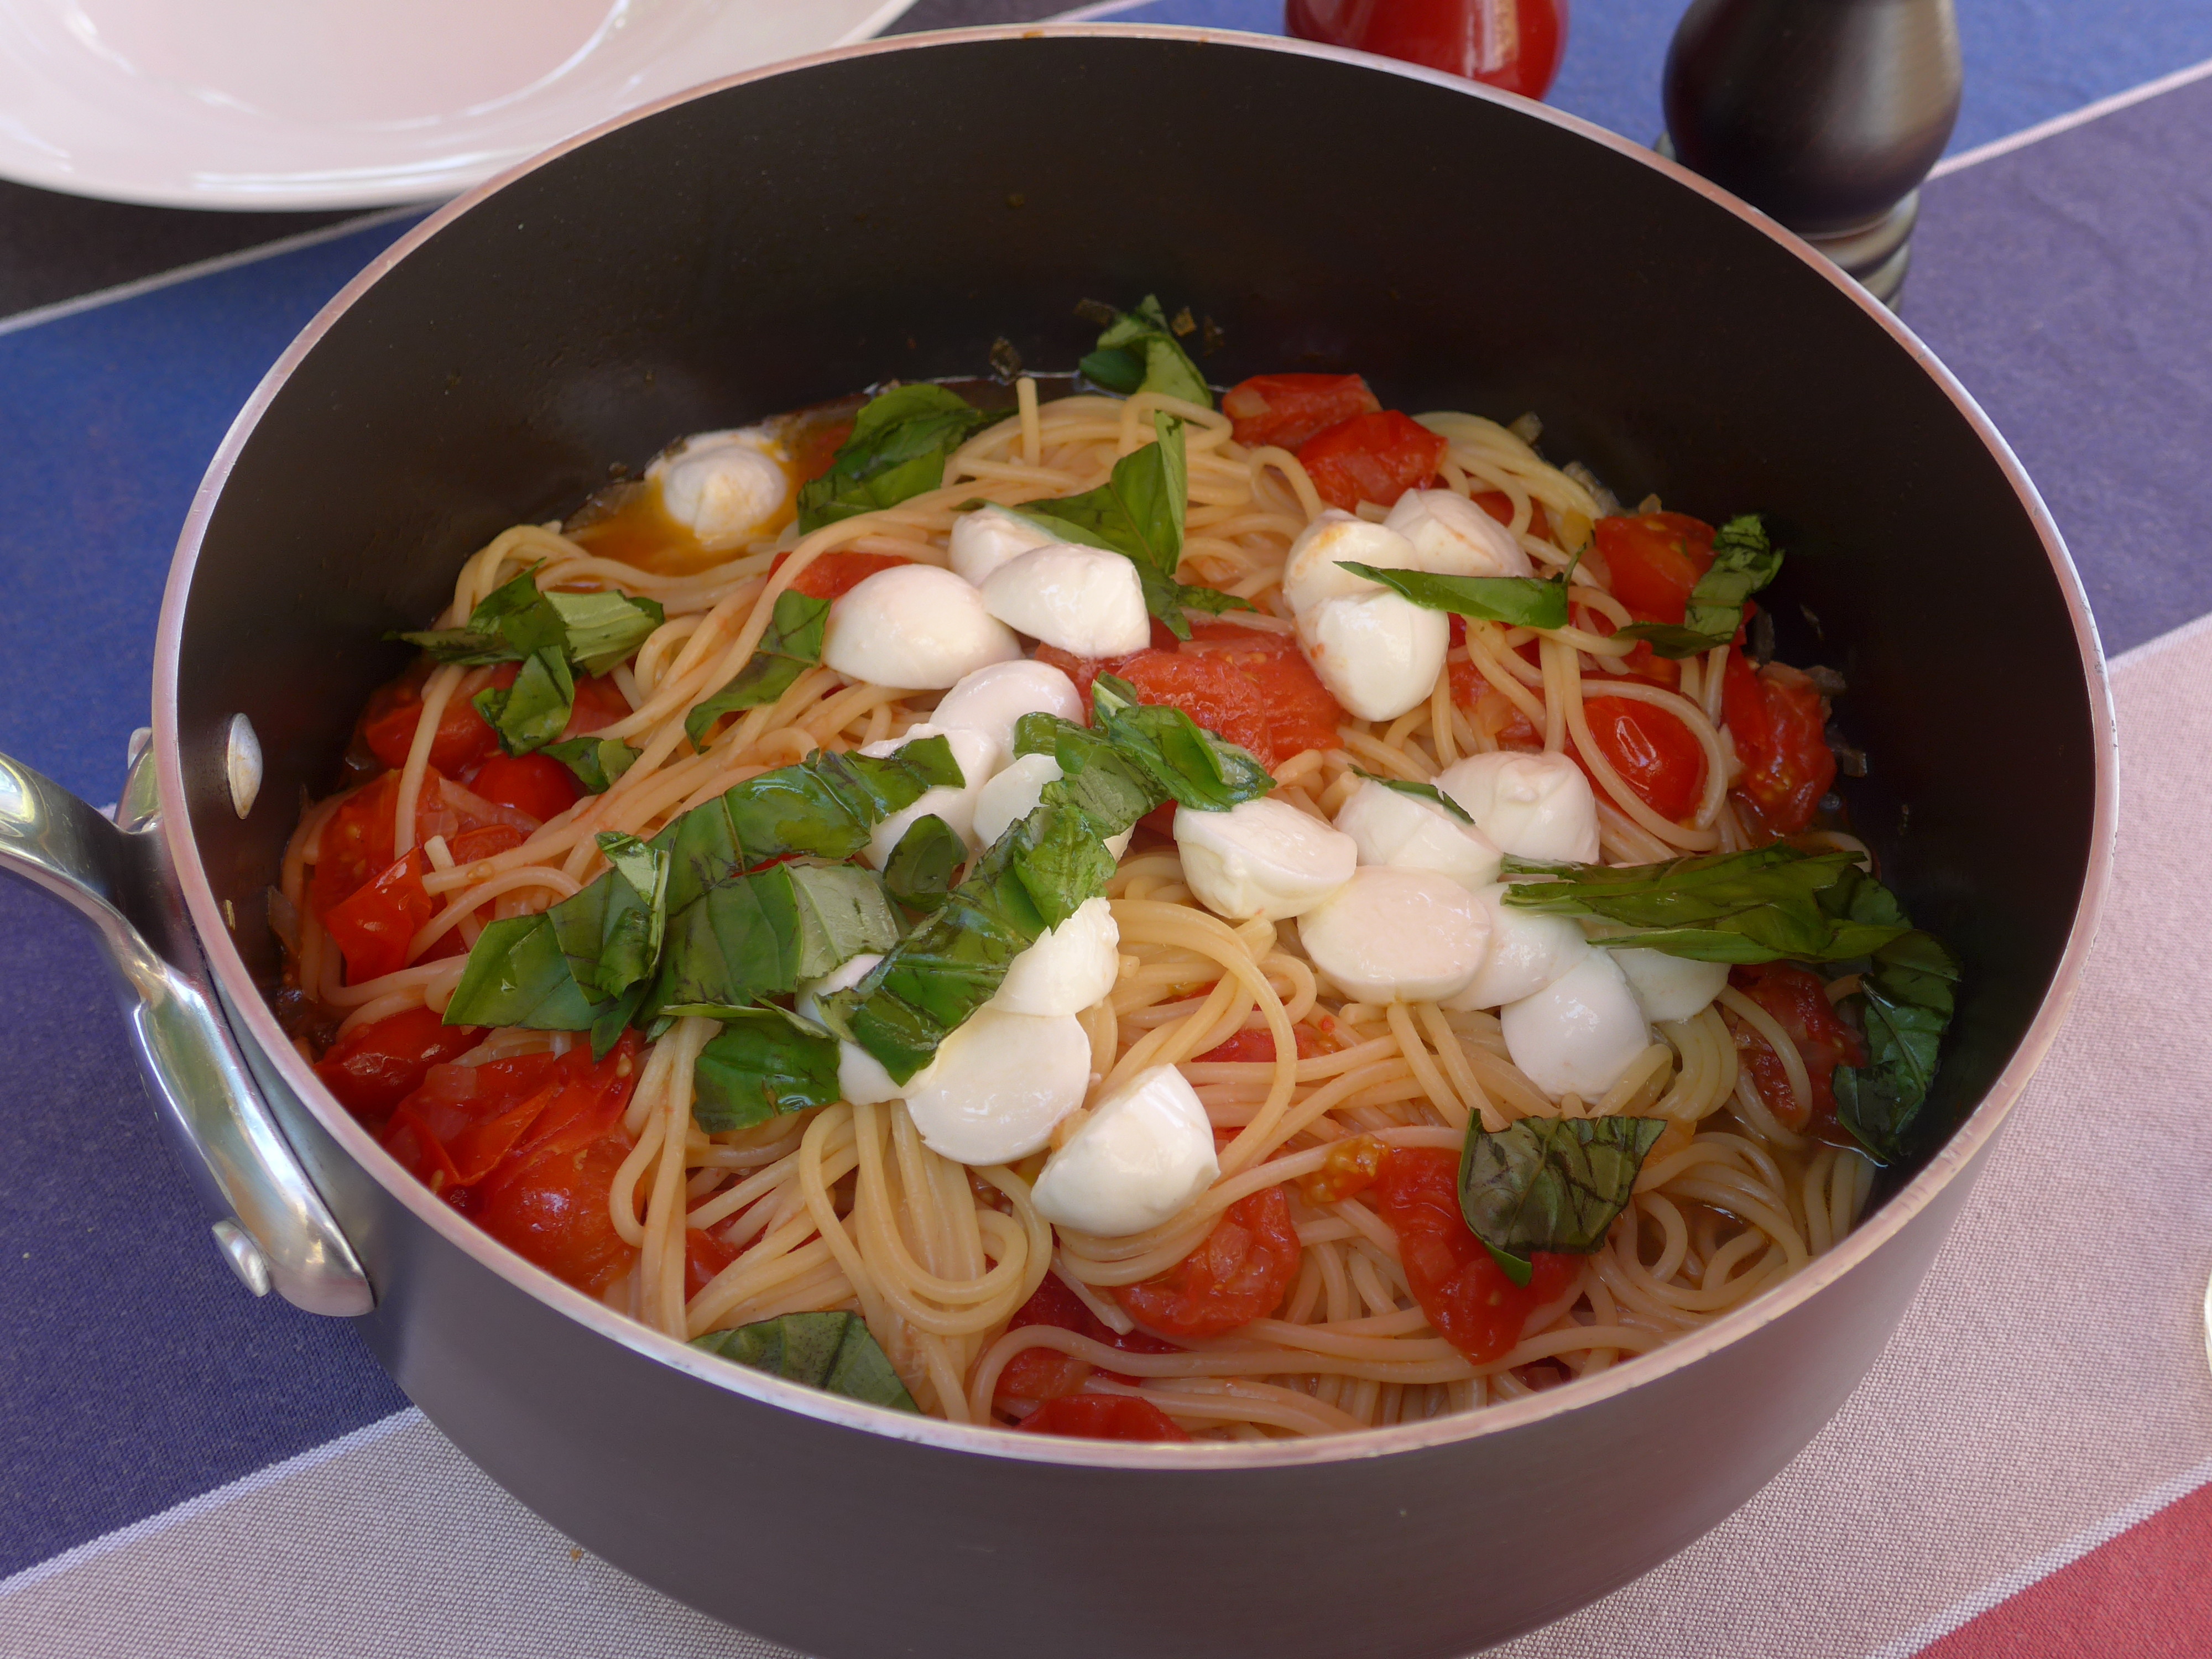 So schmeckt Italien: Spaghetti mit Kirschtomaten und Mozzarella ...